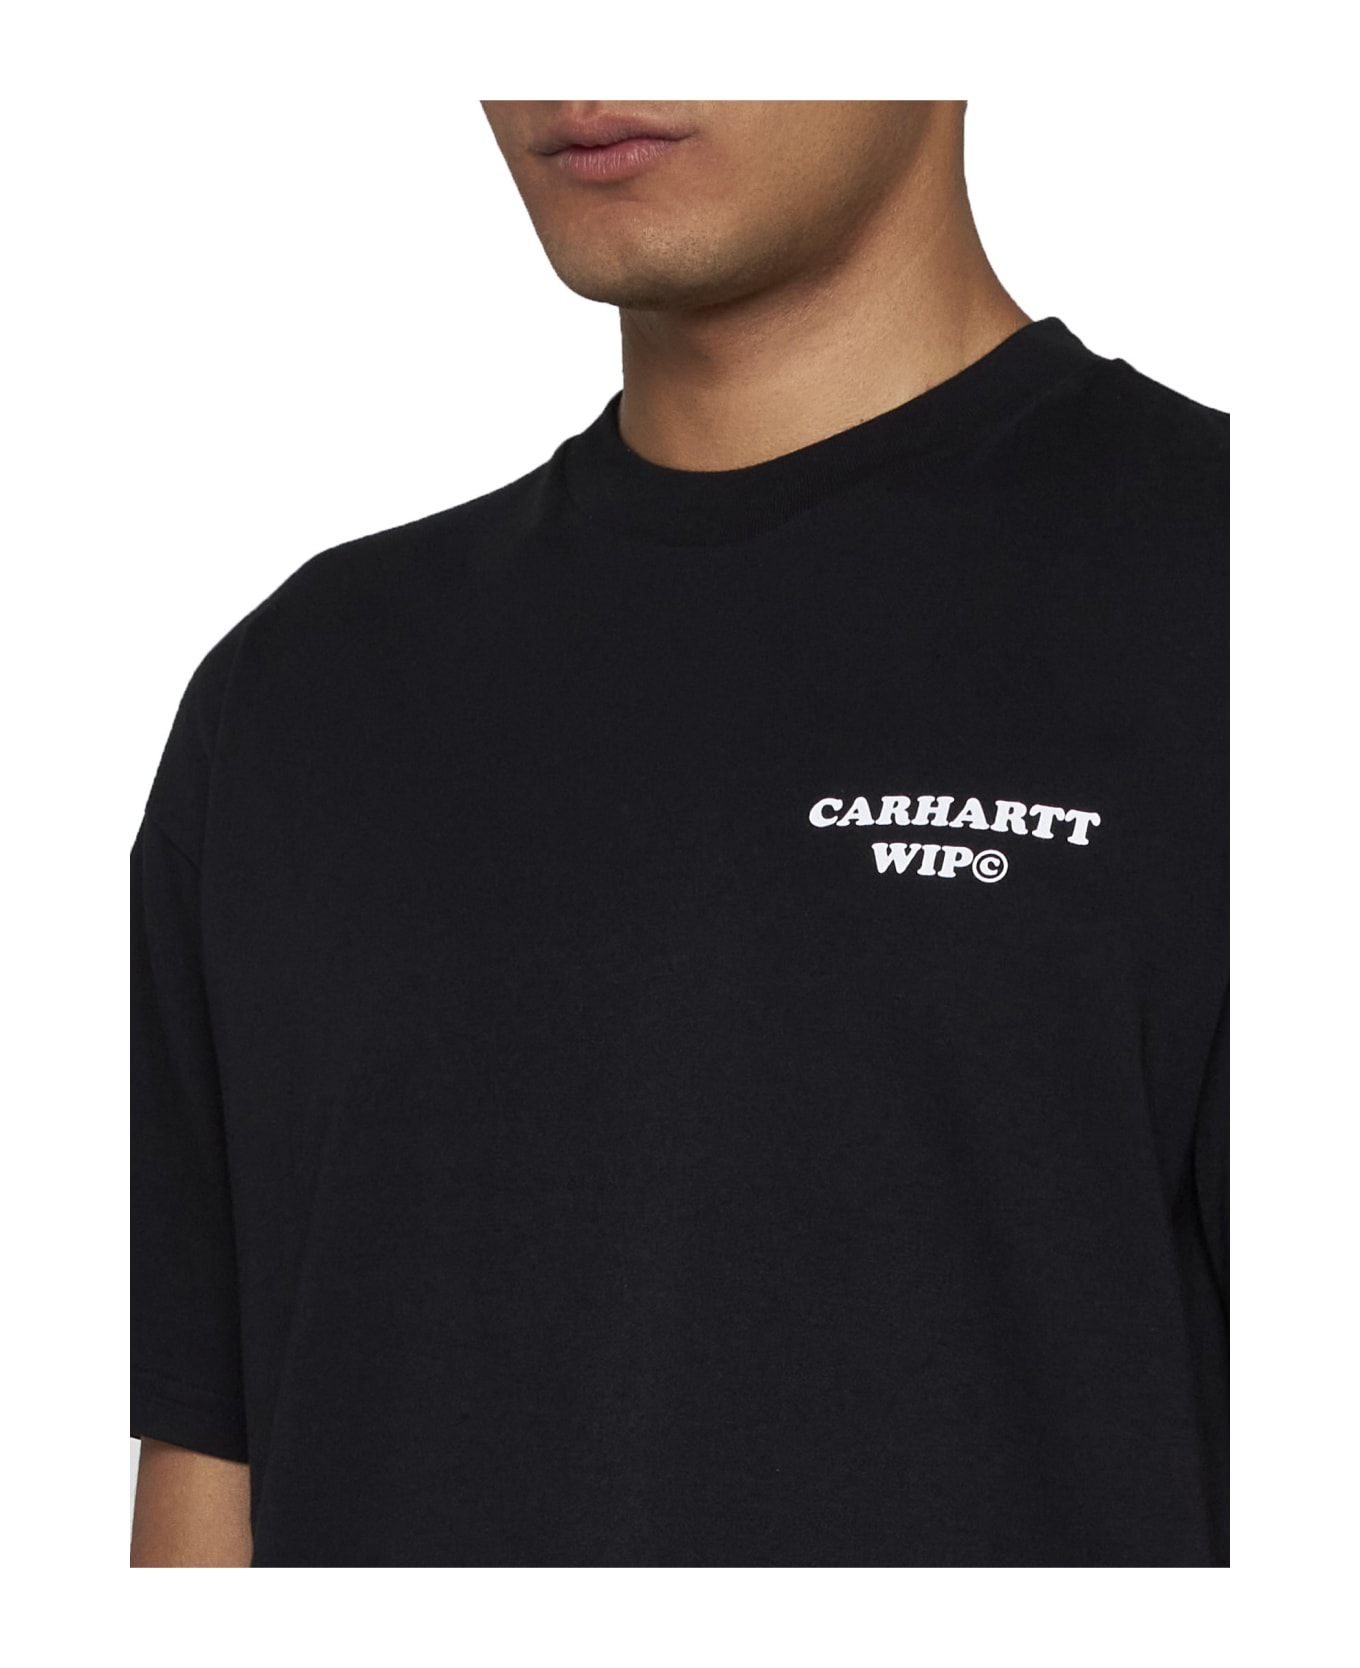 Carhartt 'isis Maria Dinner' T-shirt - Black